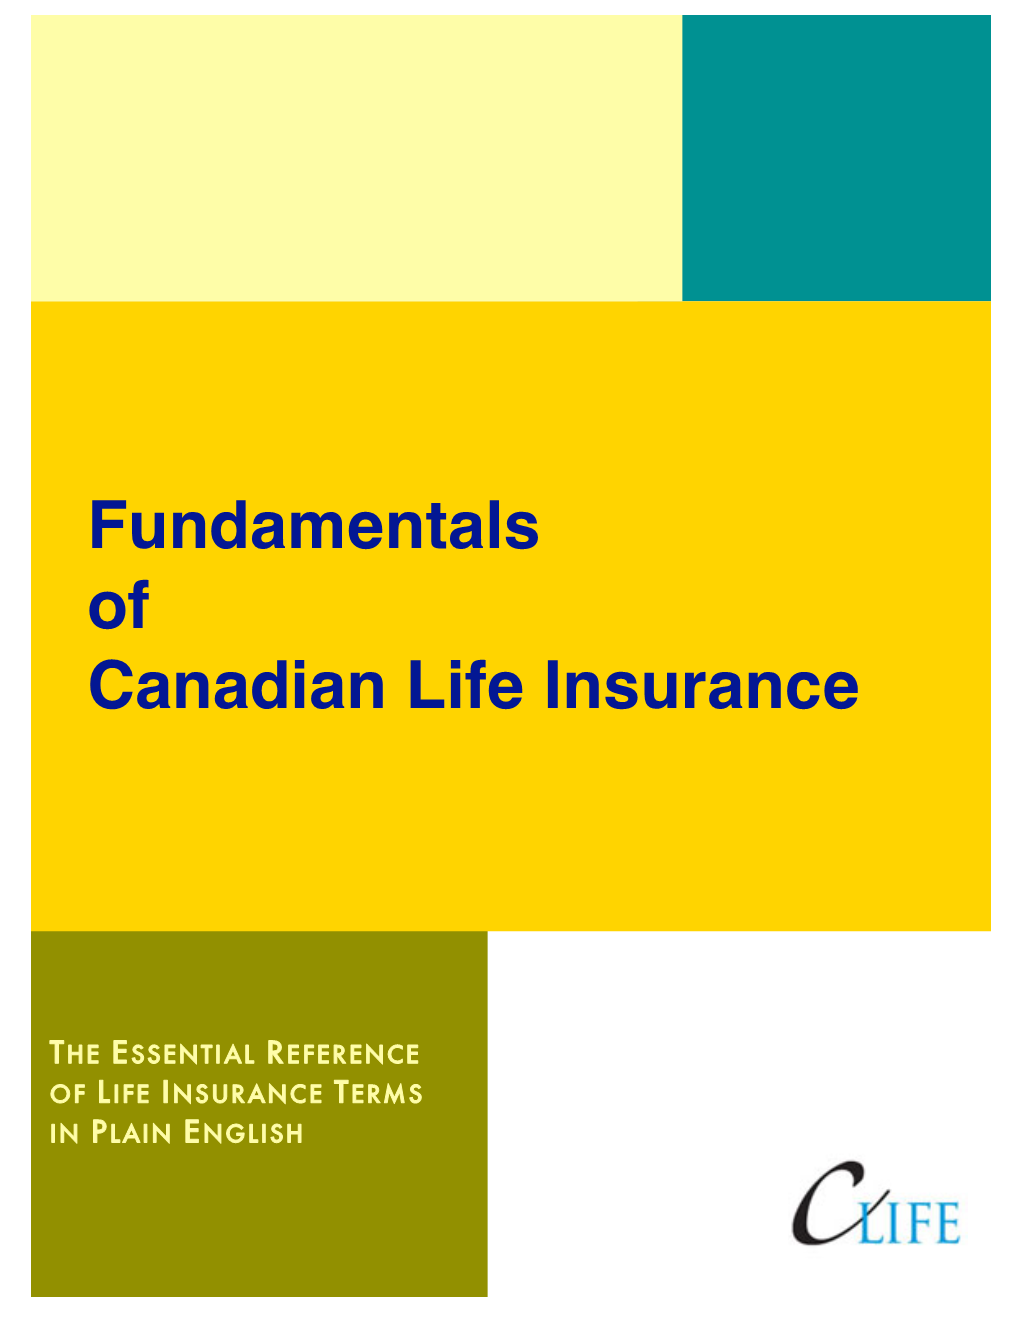 Fundamentals of Canadian Life Insurance